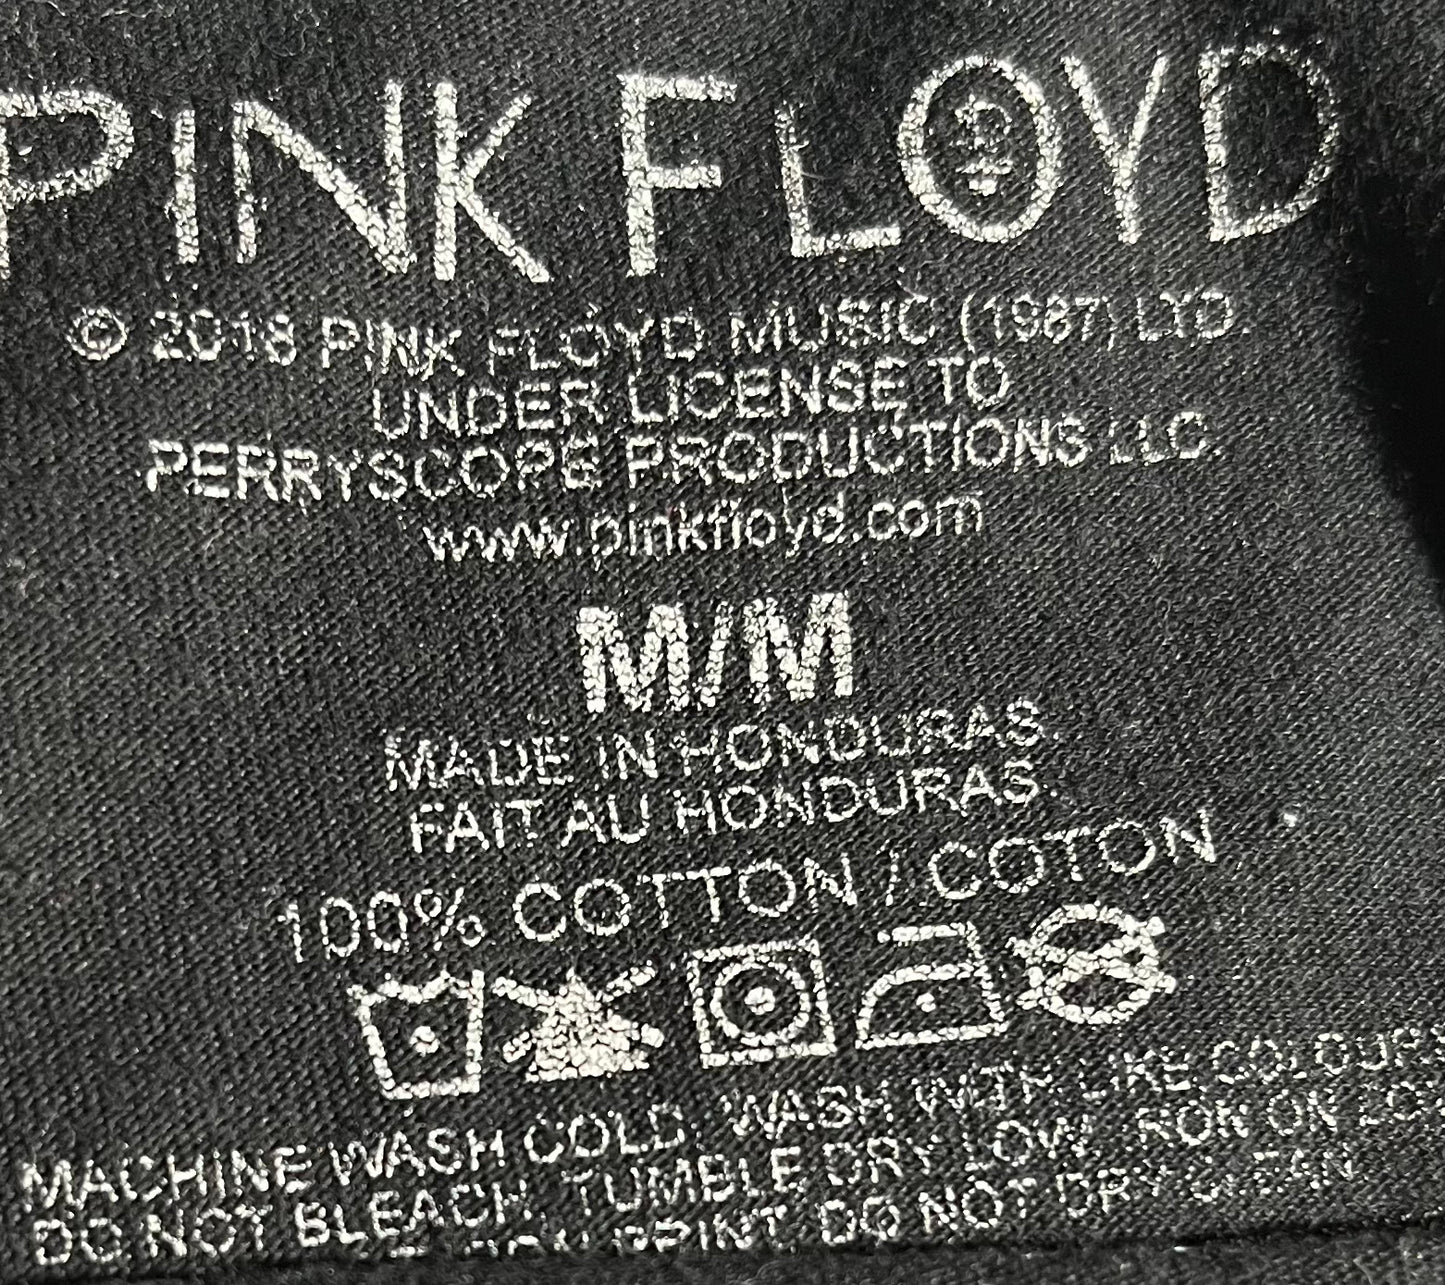 Vintage Pink Floyd T-Shirt